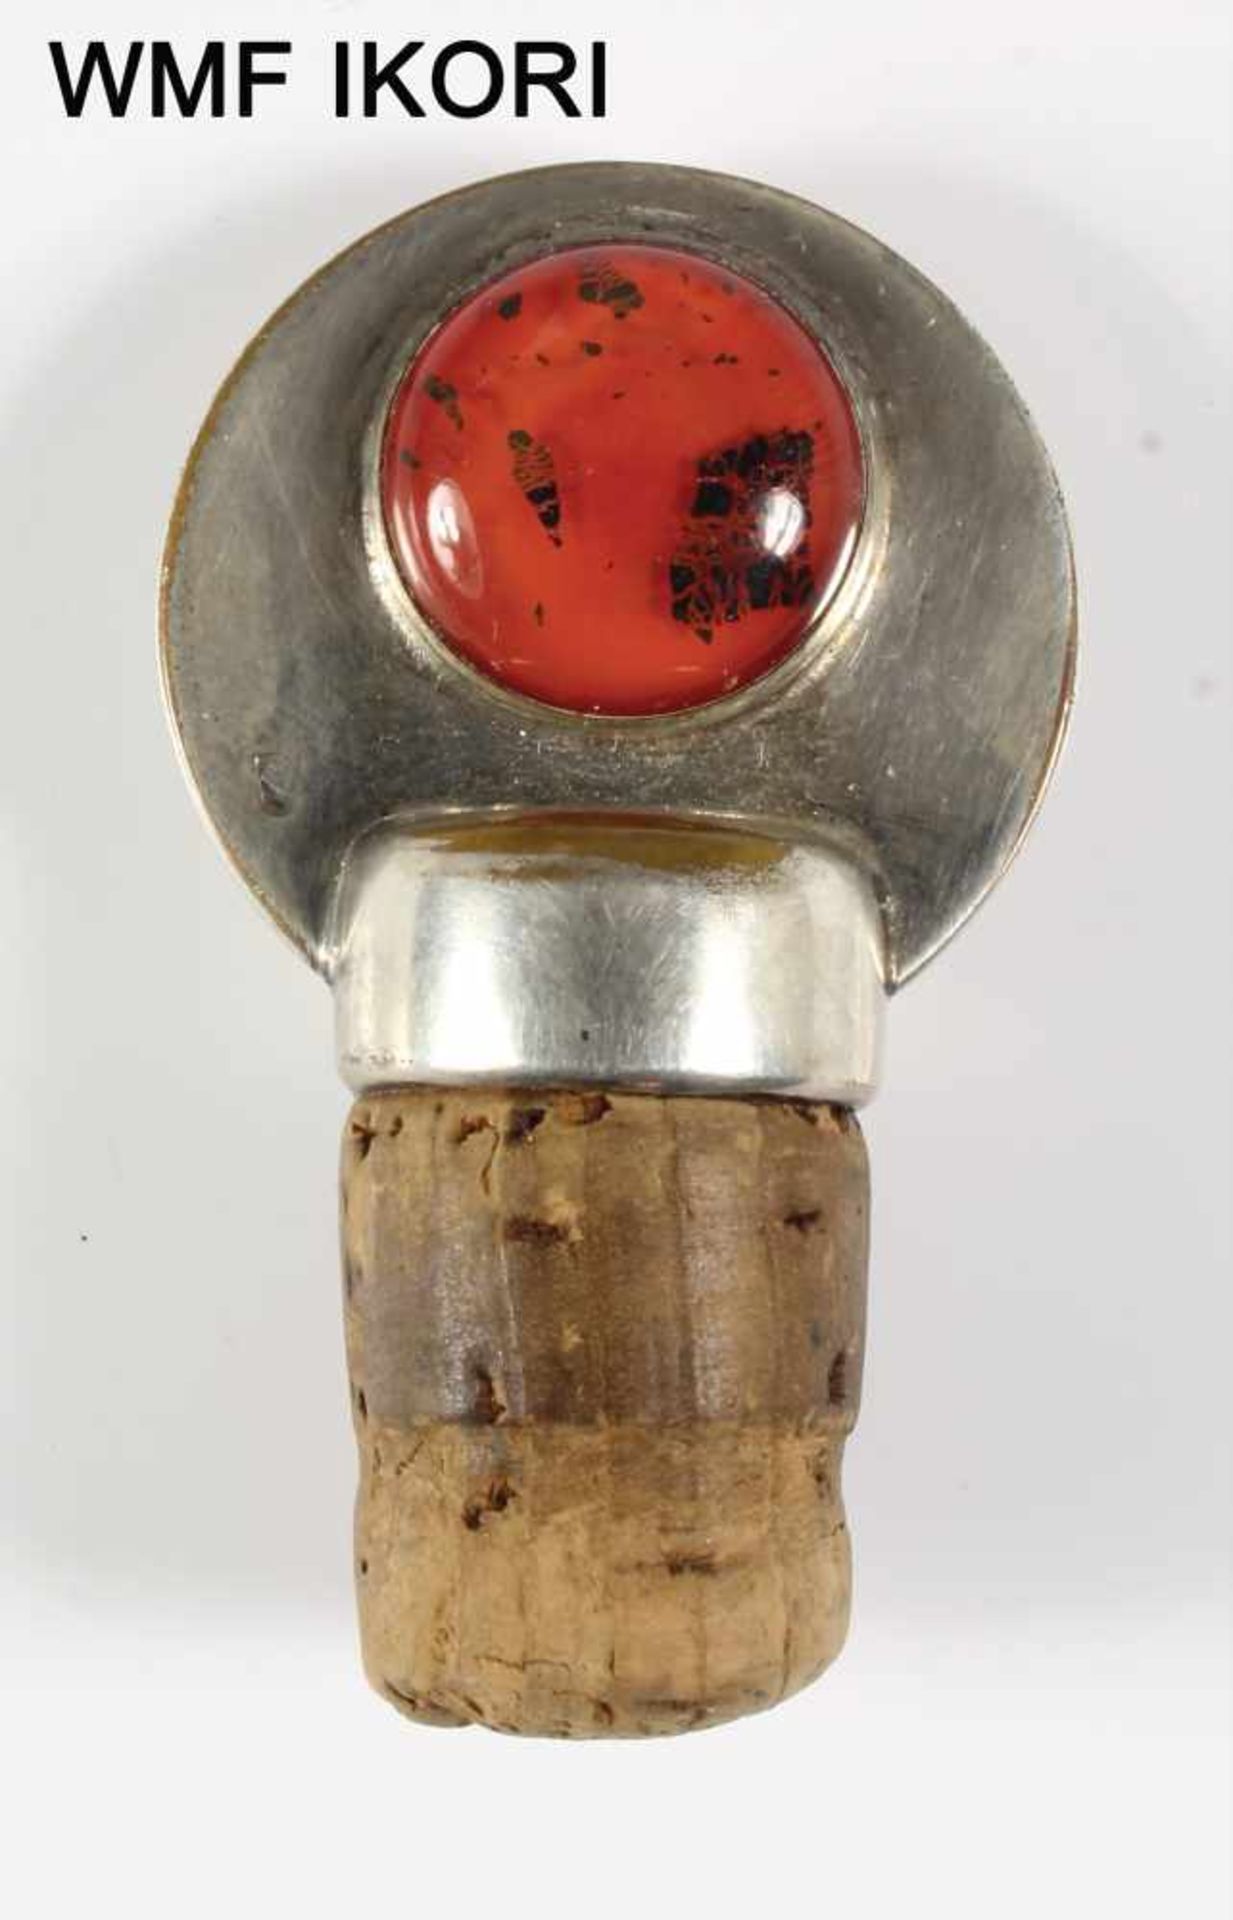 Flaschenstöpsel, "WMF-IKORA", beidseitig mit Glascabochons belegt, H = 56,7 mm